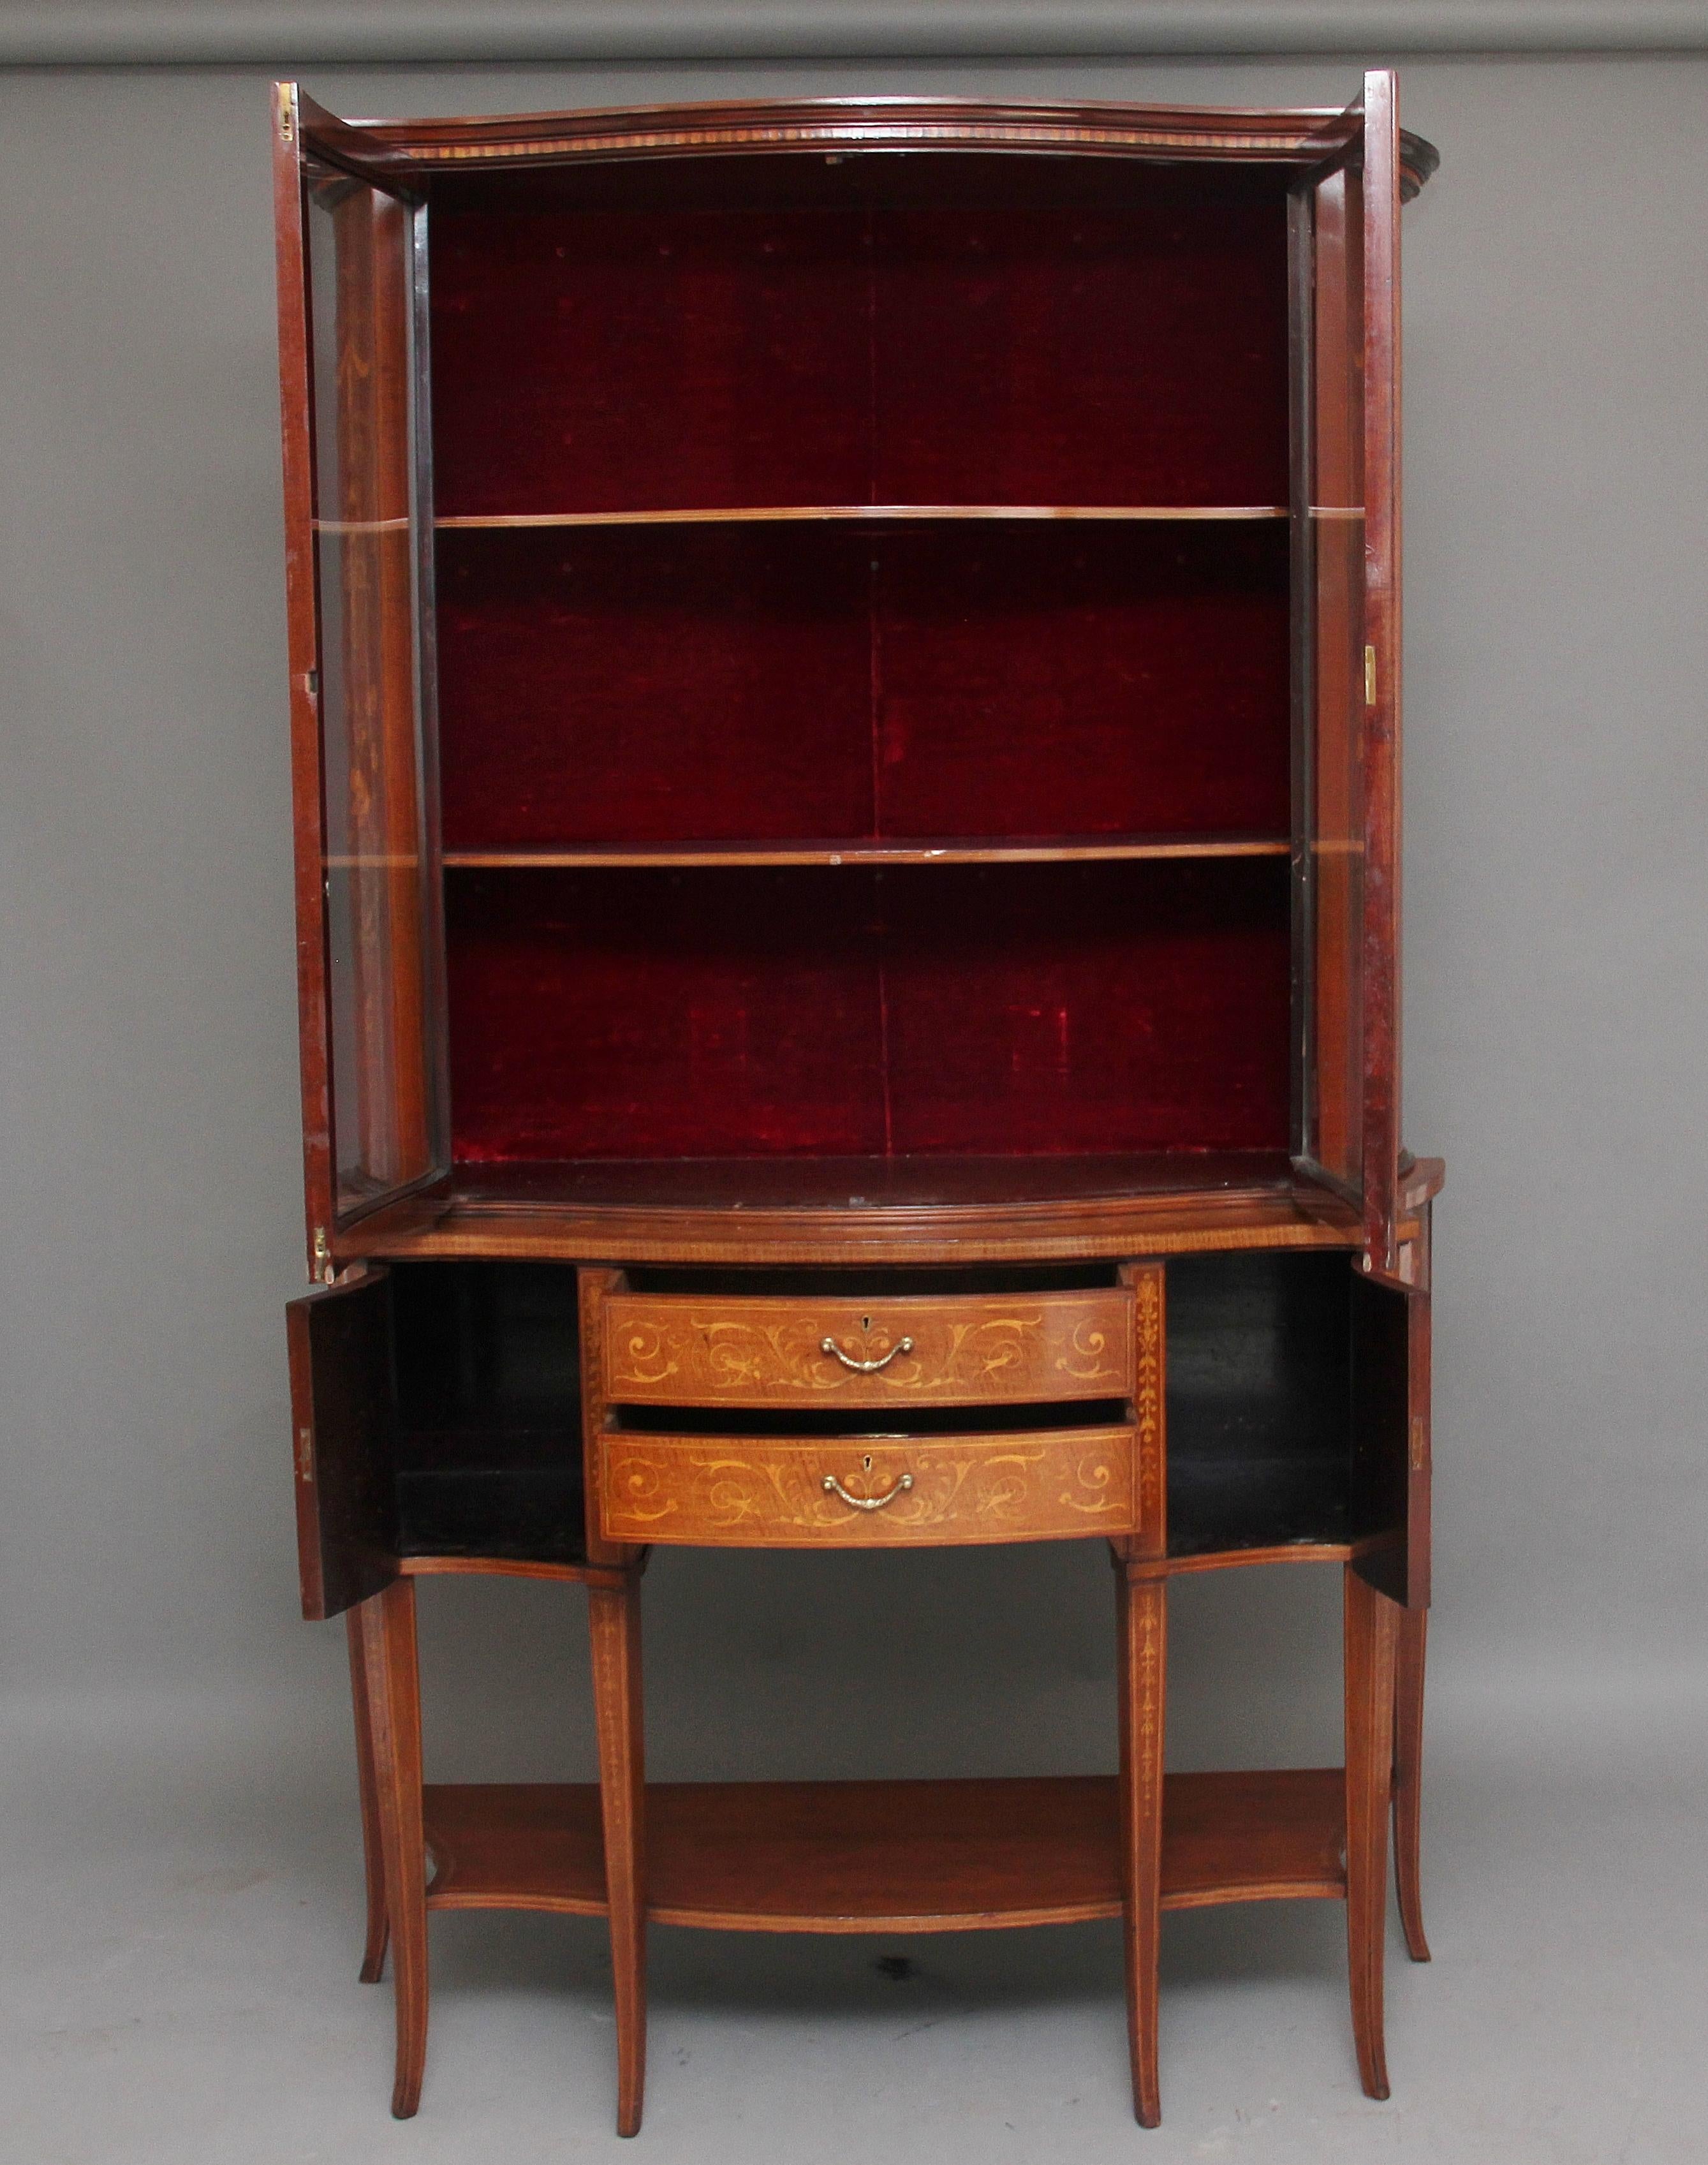 British 19th Century Inlaid Mahogany Display Cabinet For Sale